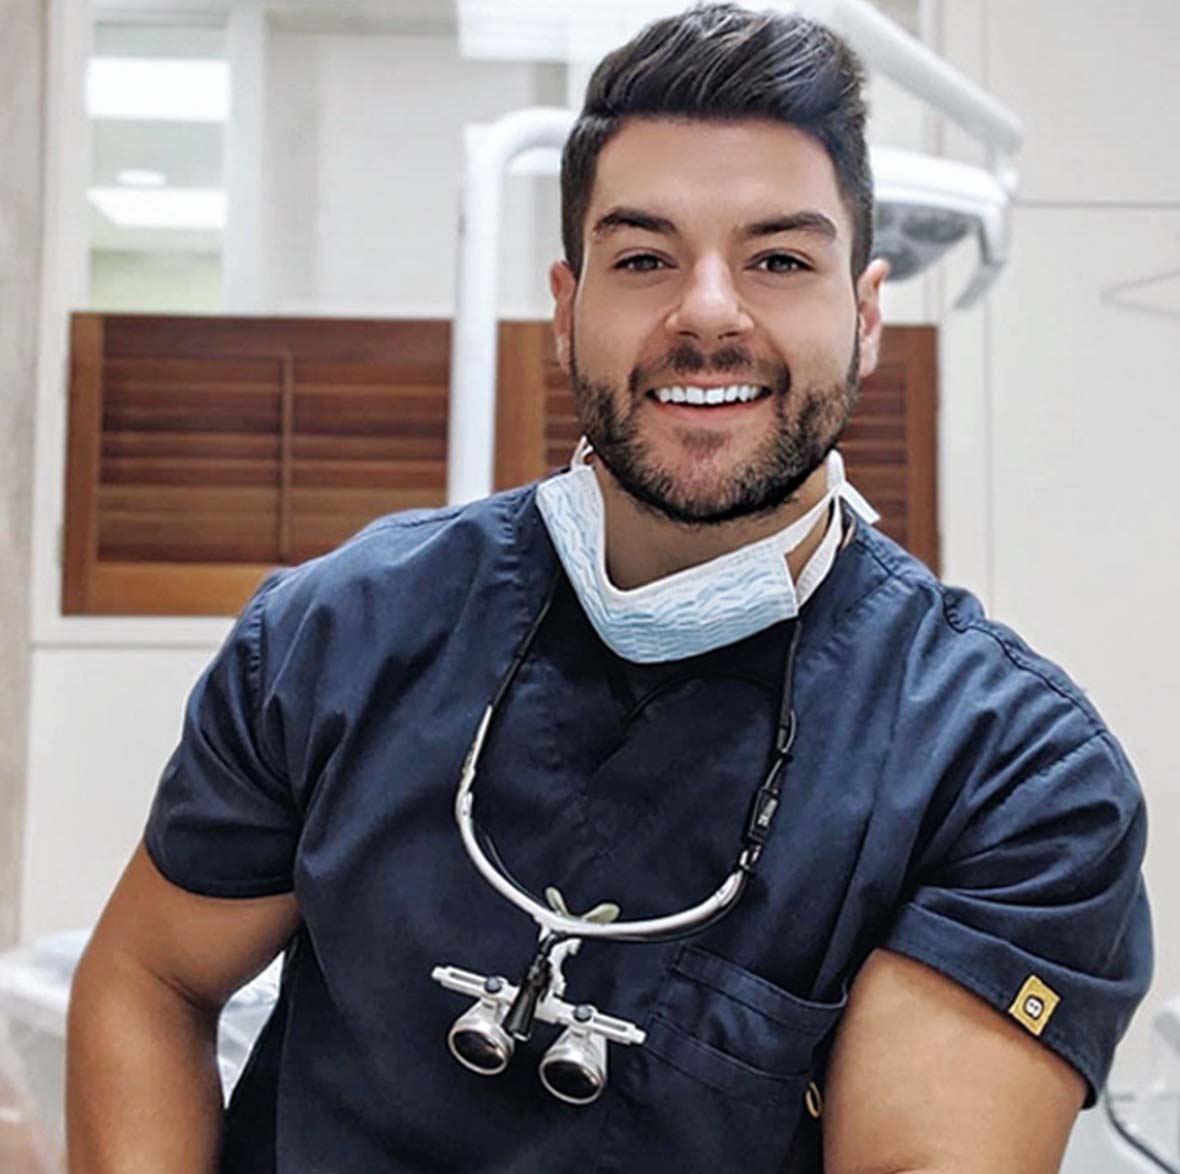 Meet The Dentist: James Bartalotta